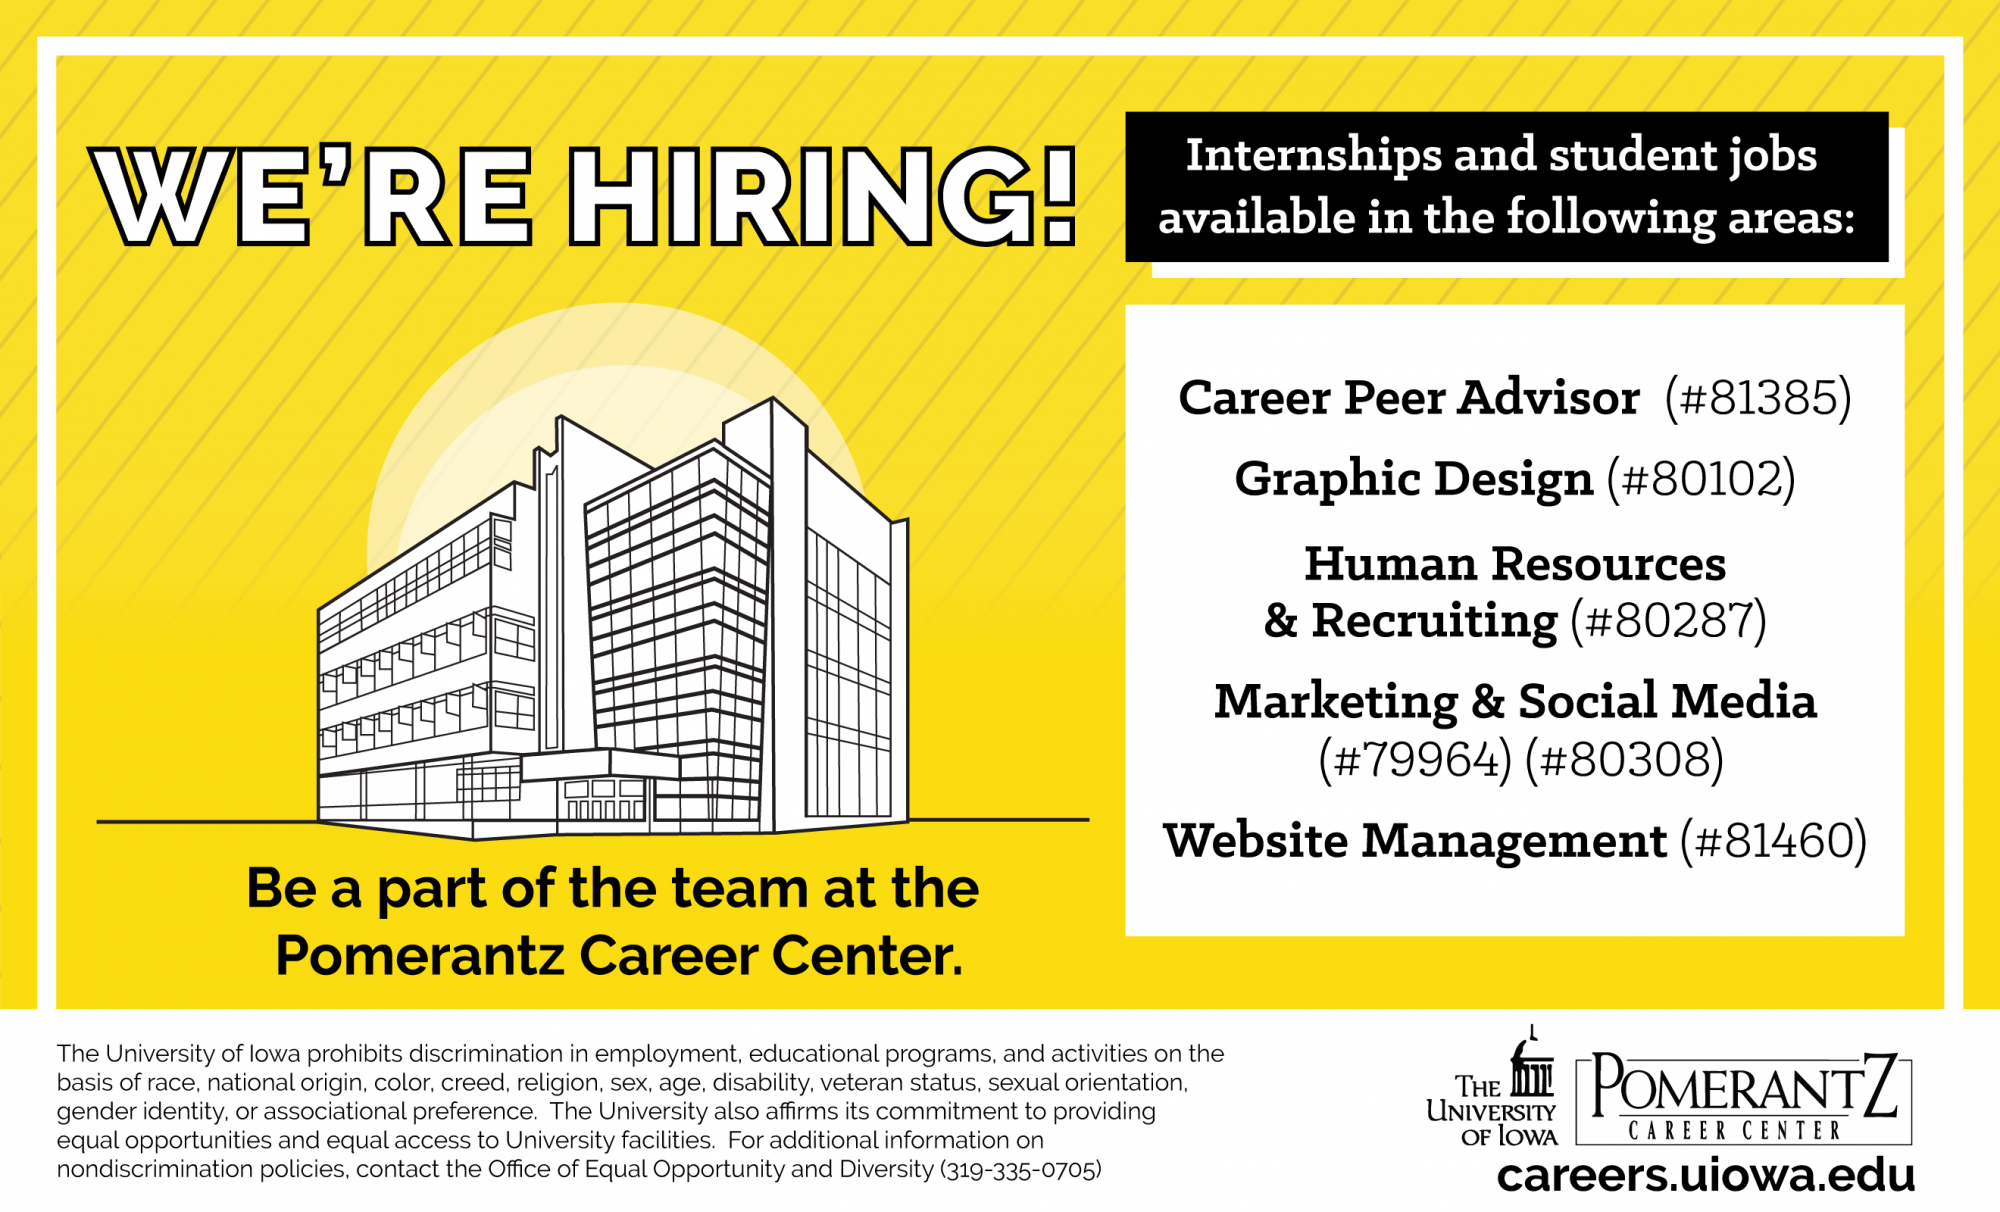 Pomerantz Career Center is hiring students. Search UI-Pomerantz Center on HireaHawk.com for full details.